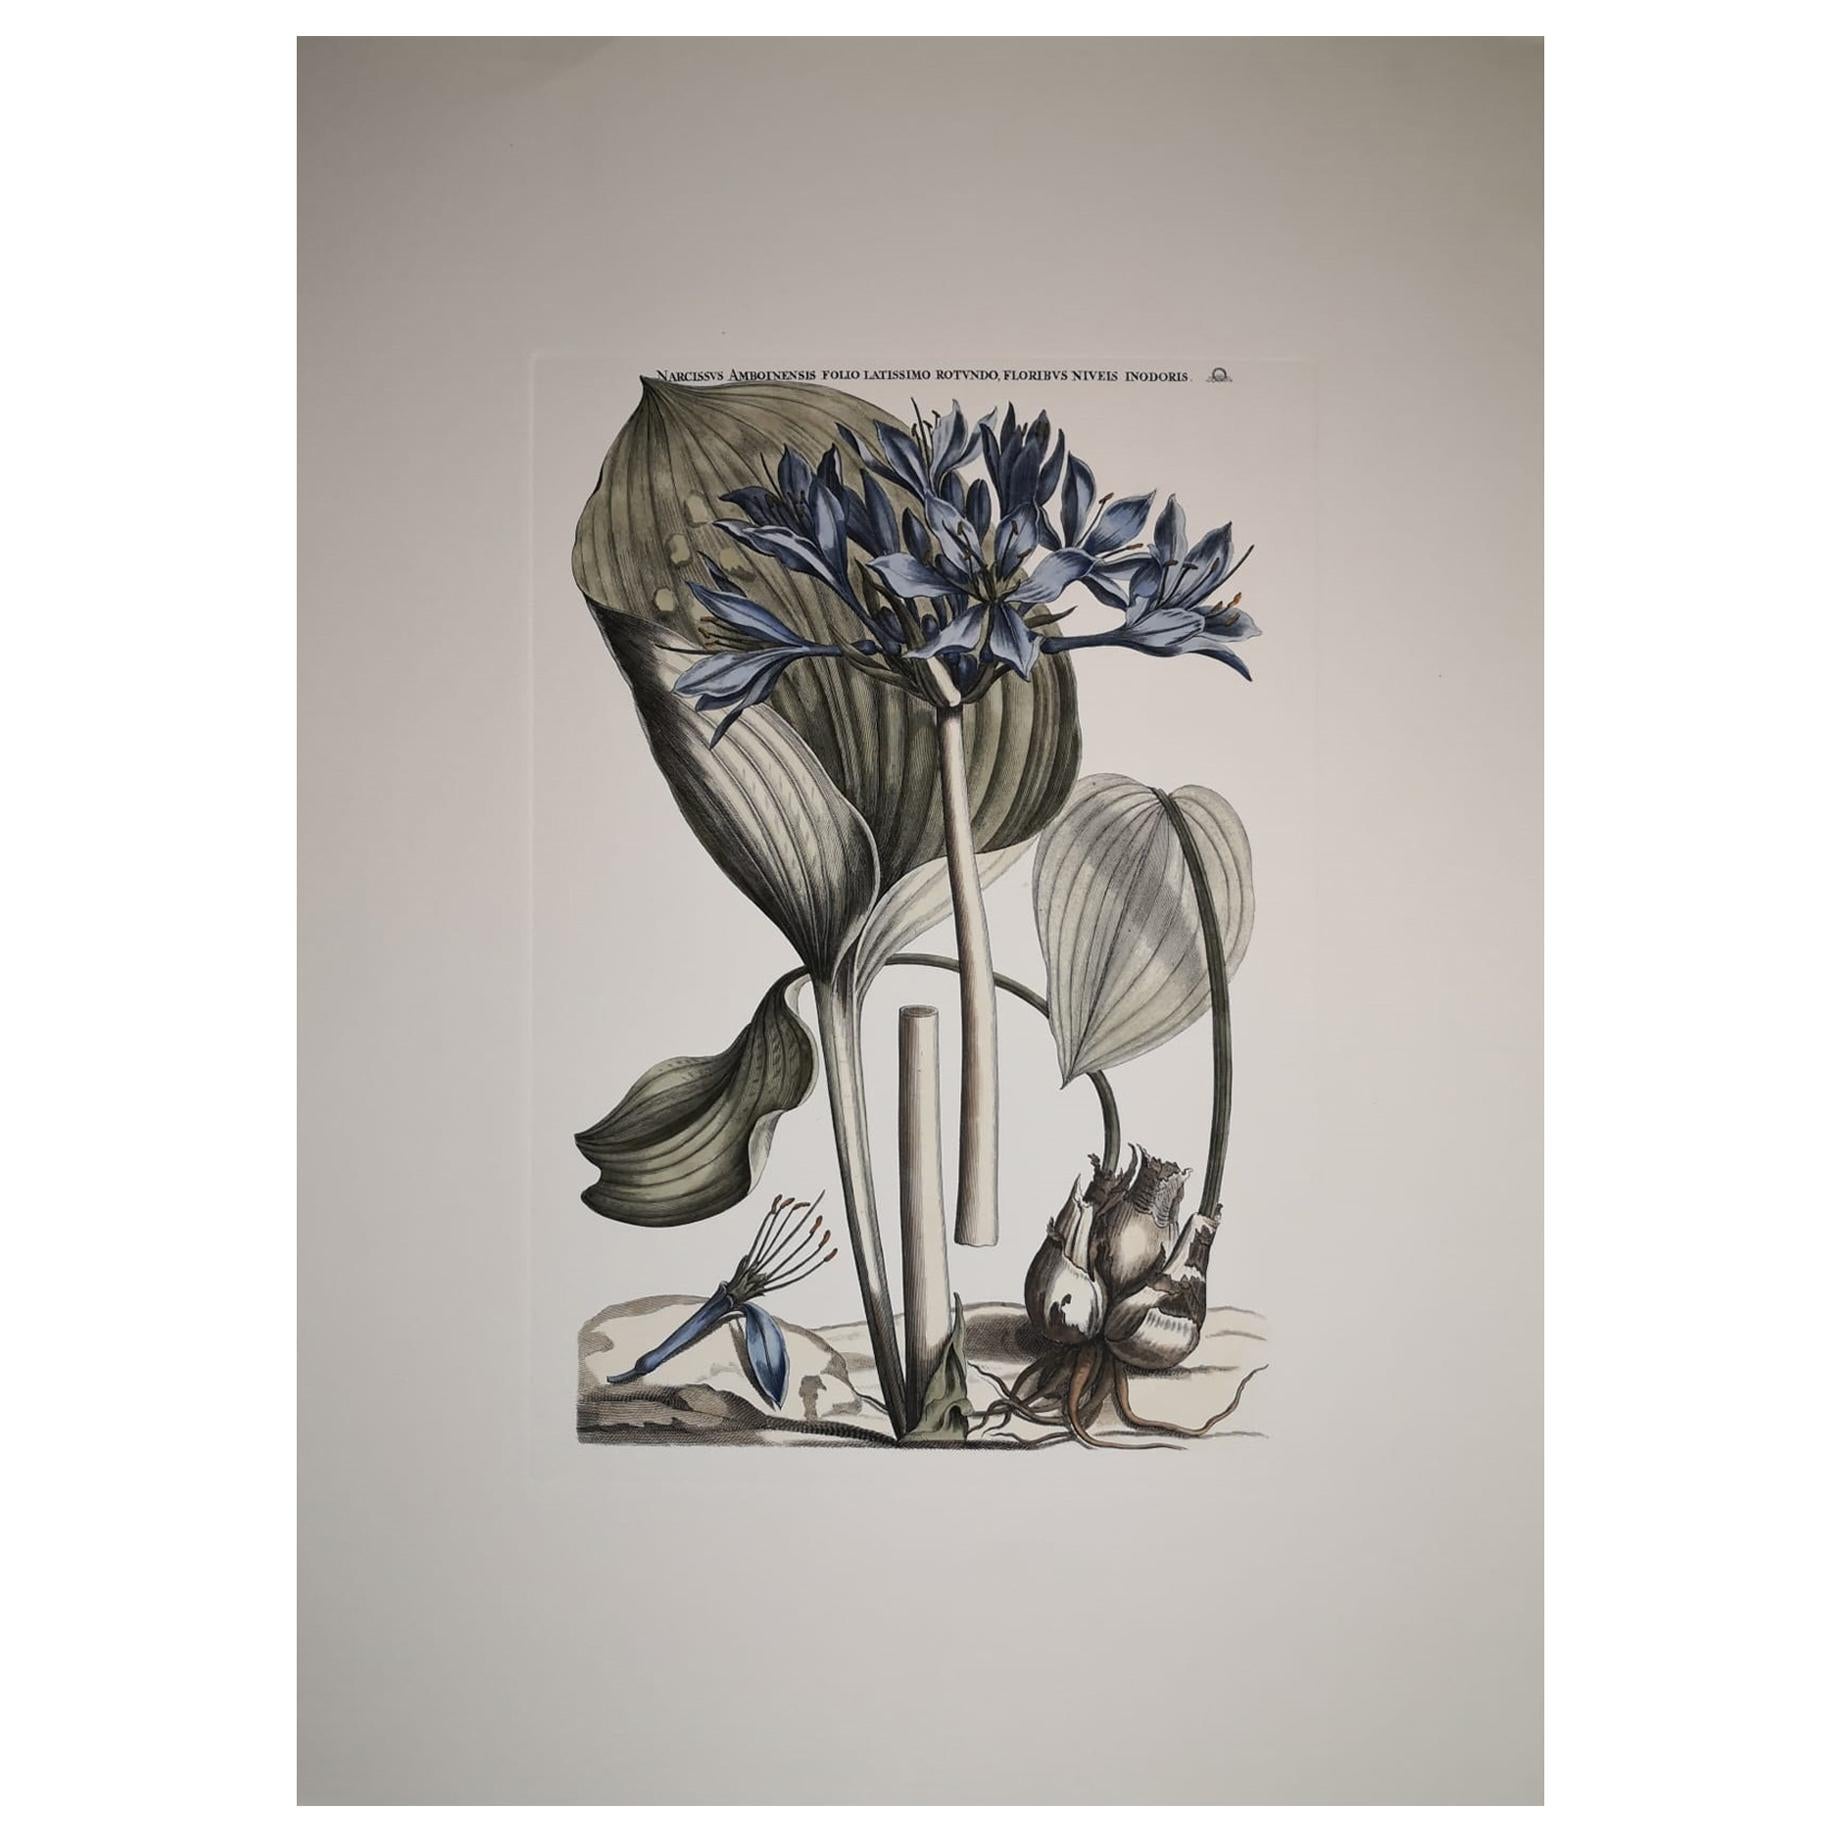 Italian Contemporary Hand Painted Botanical Print "Narcissus Amboineris "